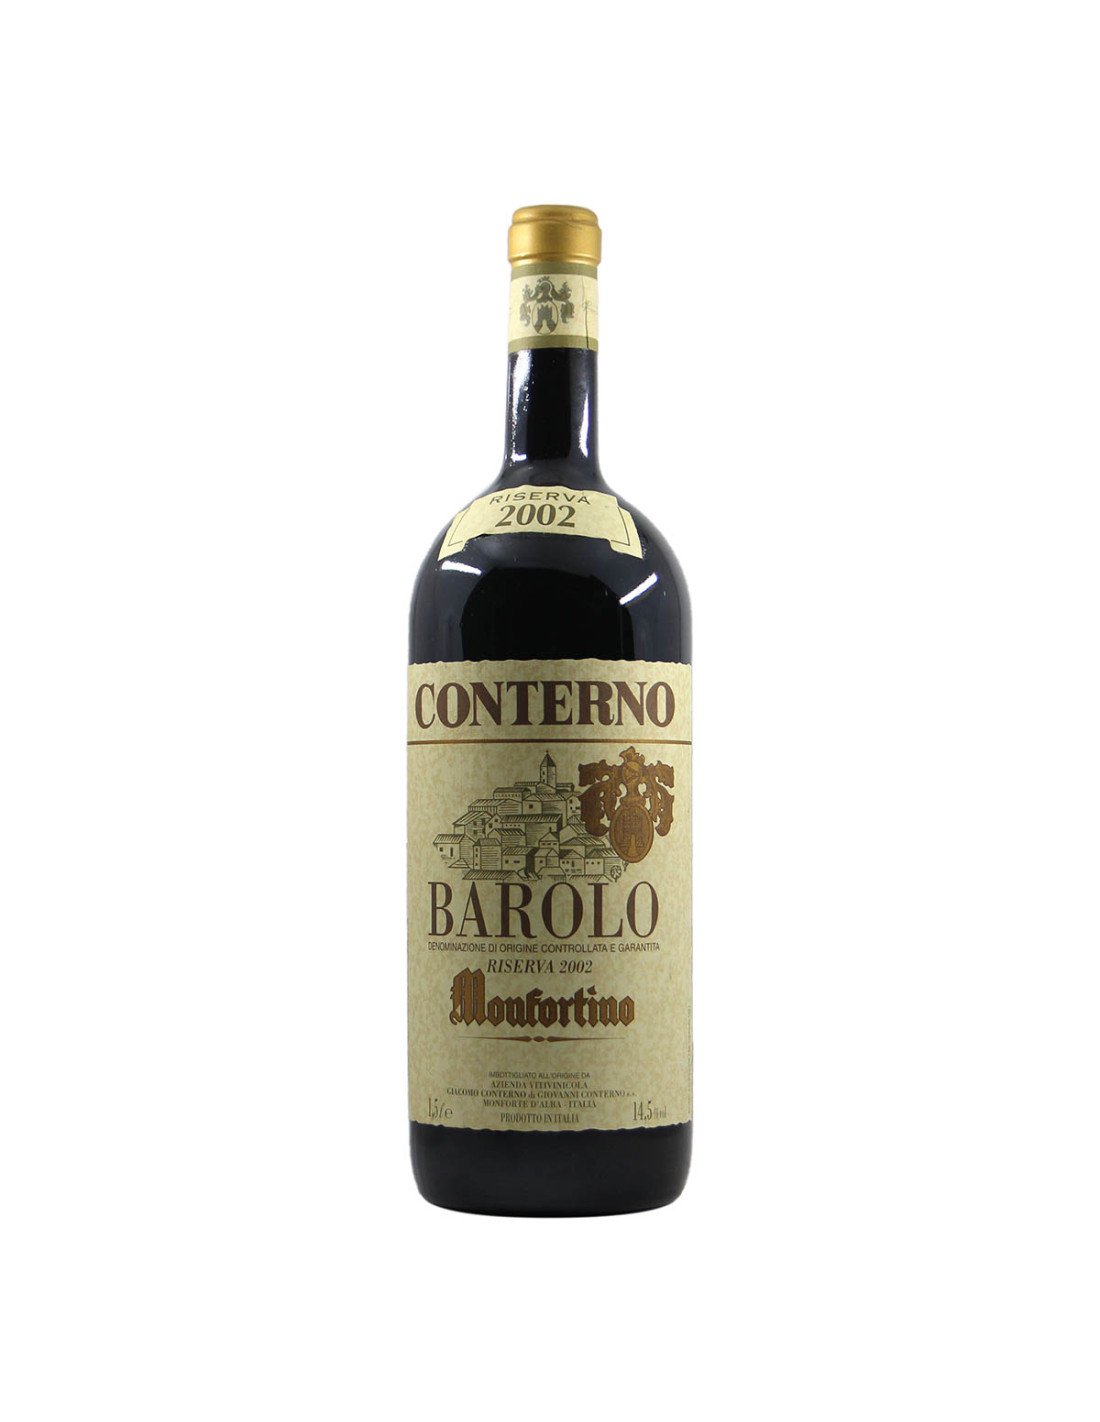 Giacomo Conterno Barolo Riserva Monfortino 2002 Magnum Grandi Bottiglie